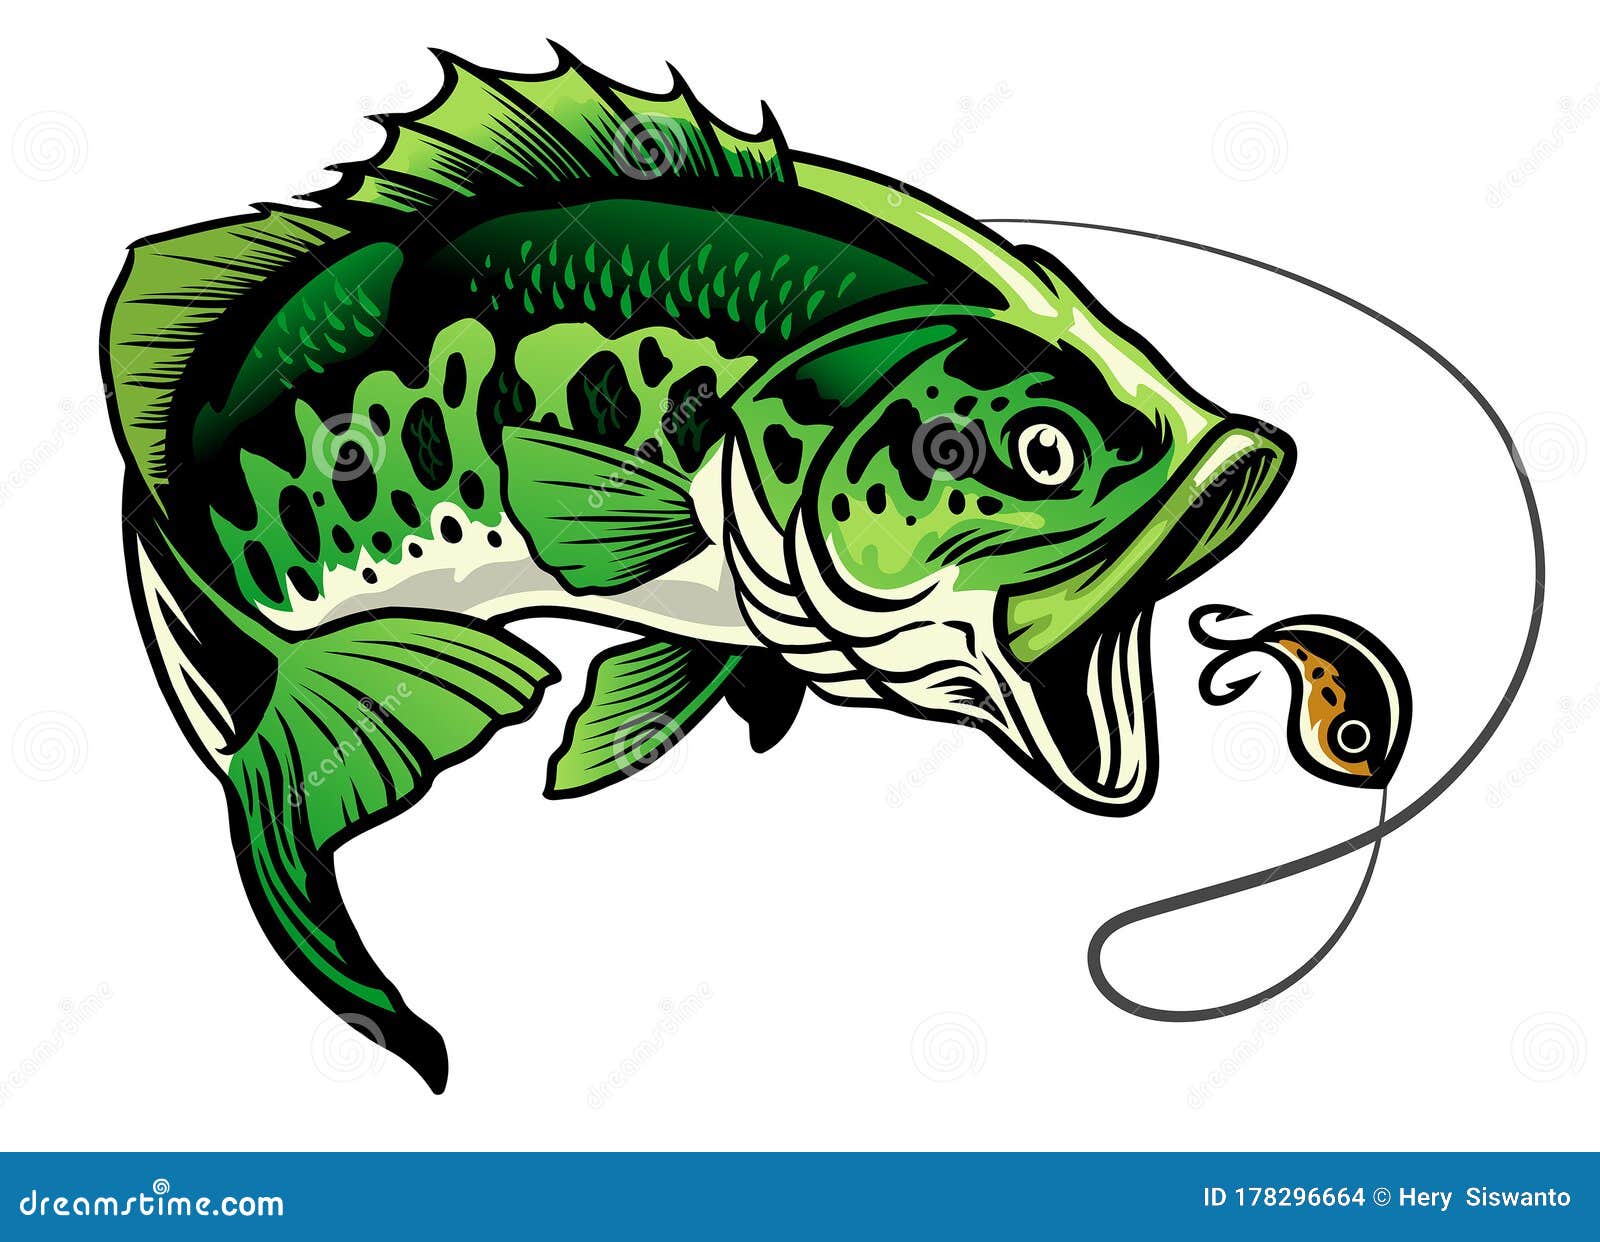 bass fish catching the fishing lure